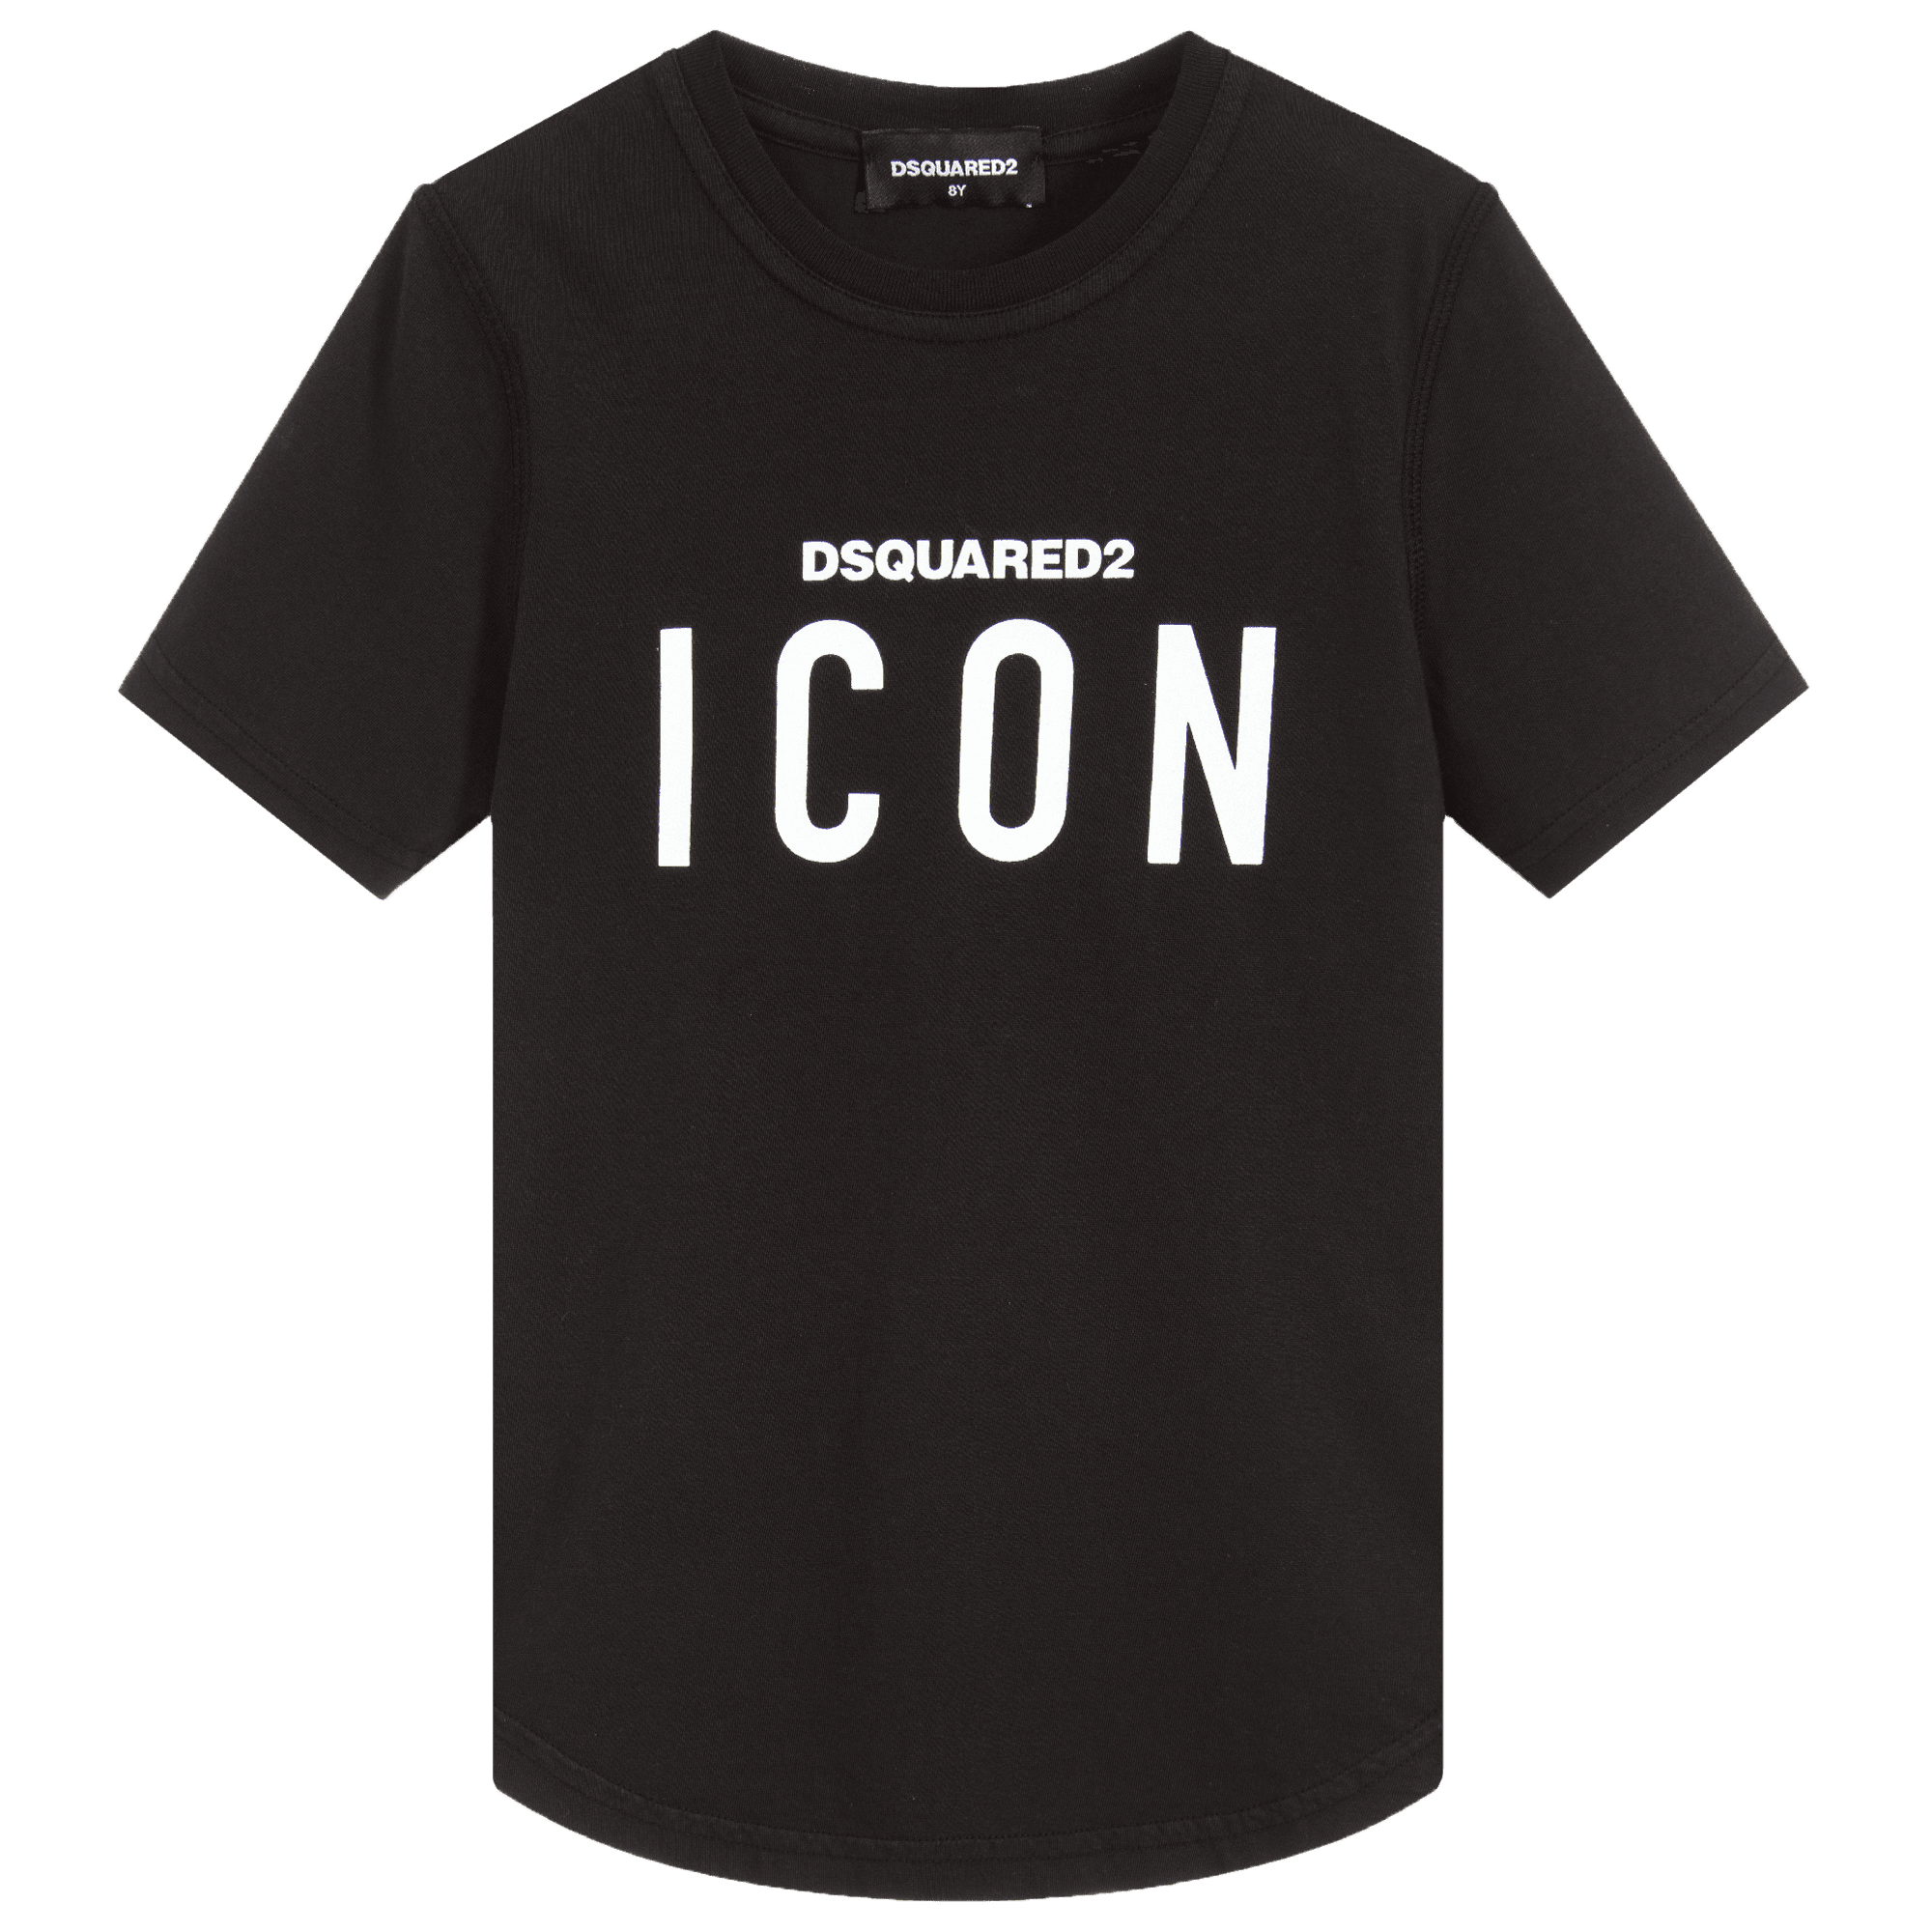 Dsquared2 Boys ICON T-Shirt Black